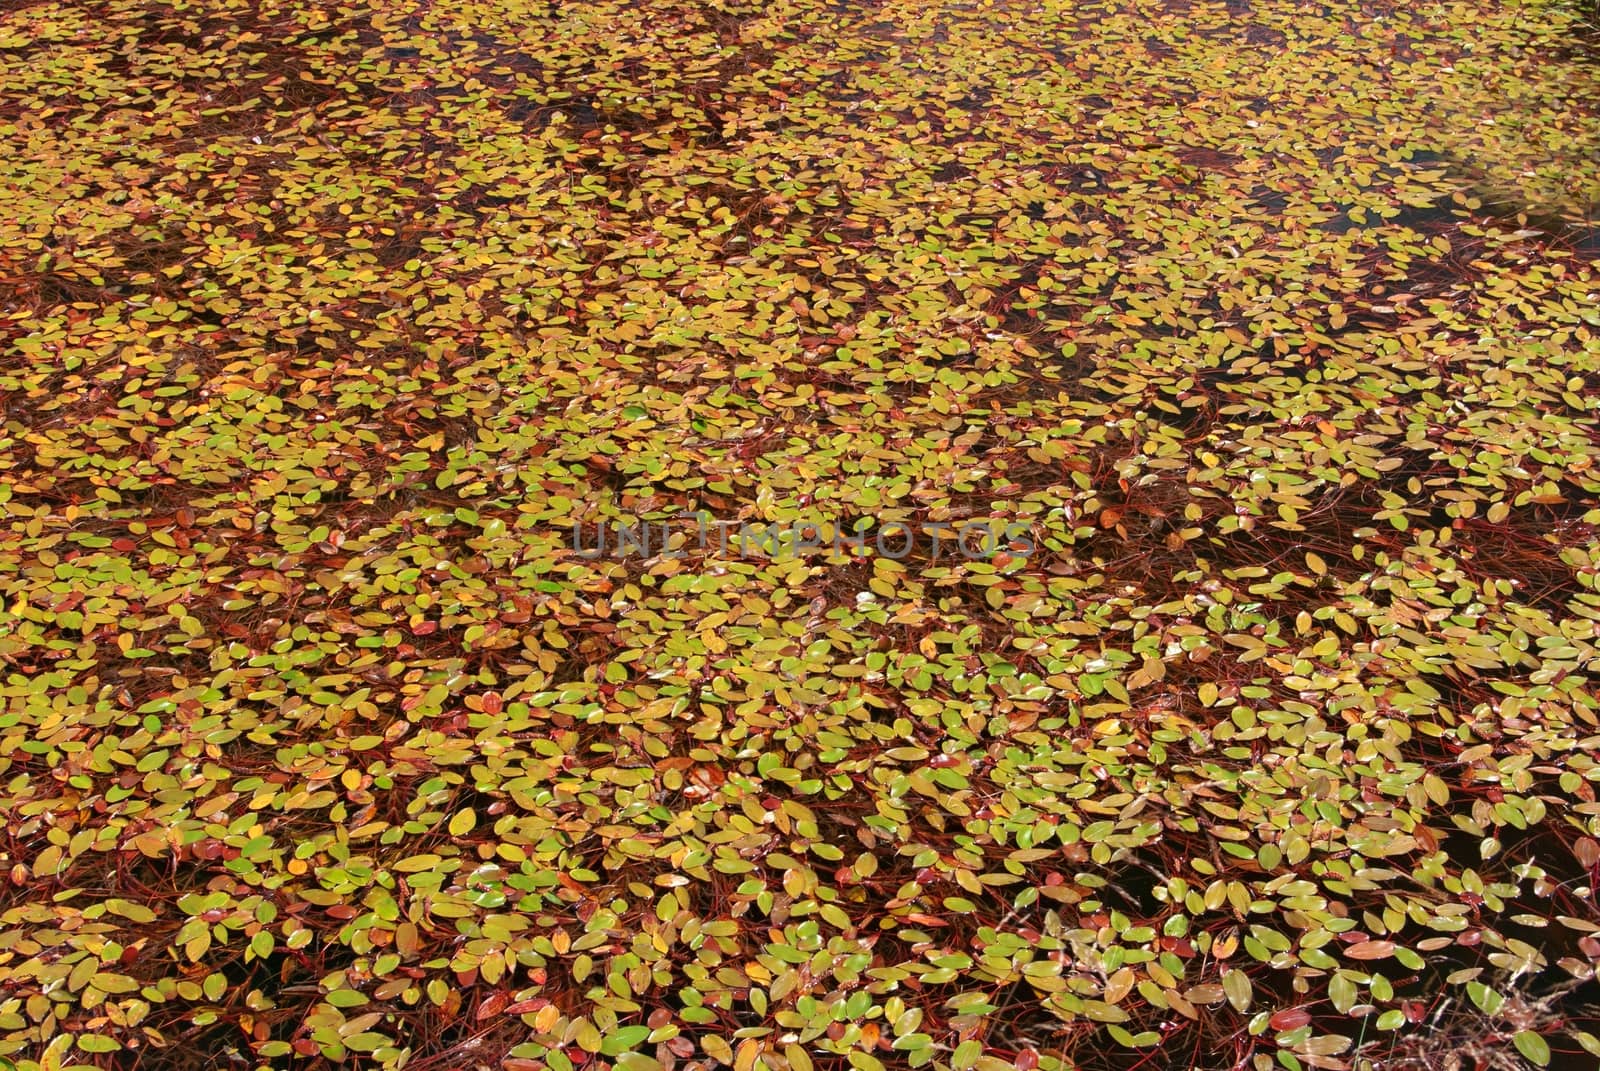 Leaves in swamp - texture